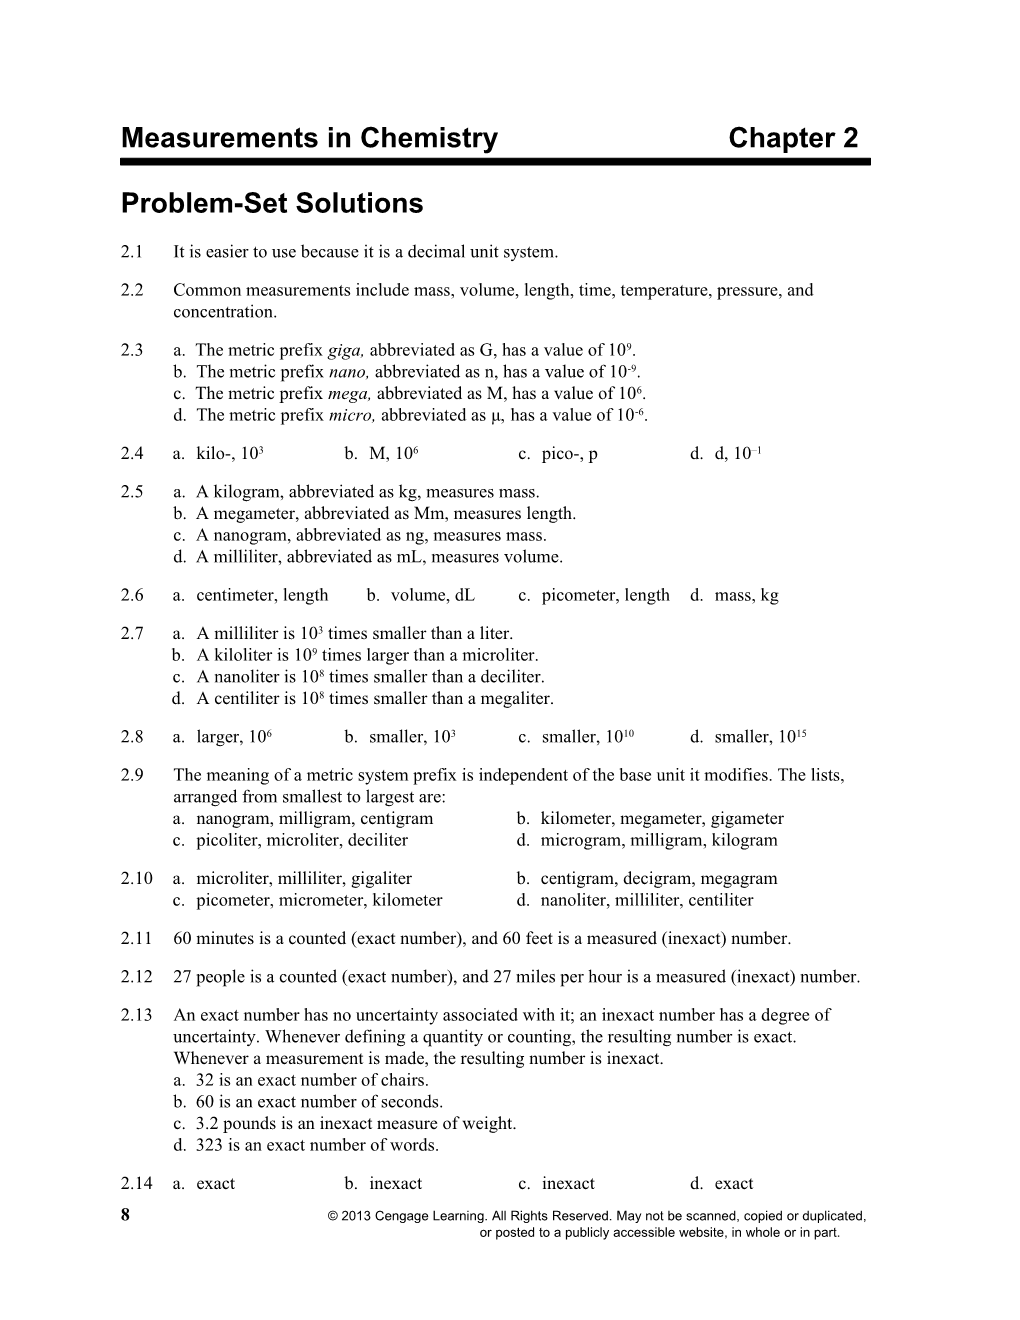 Problem-Set Solutions Chapter 2 11